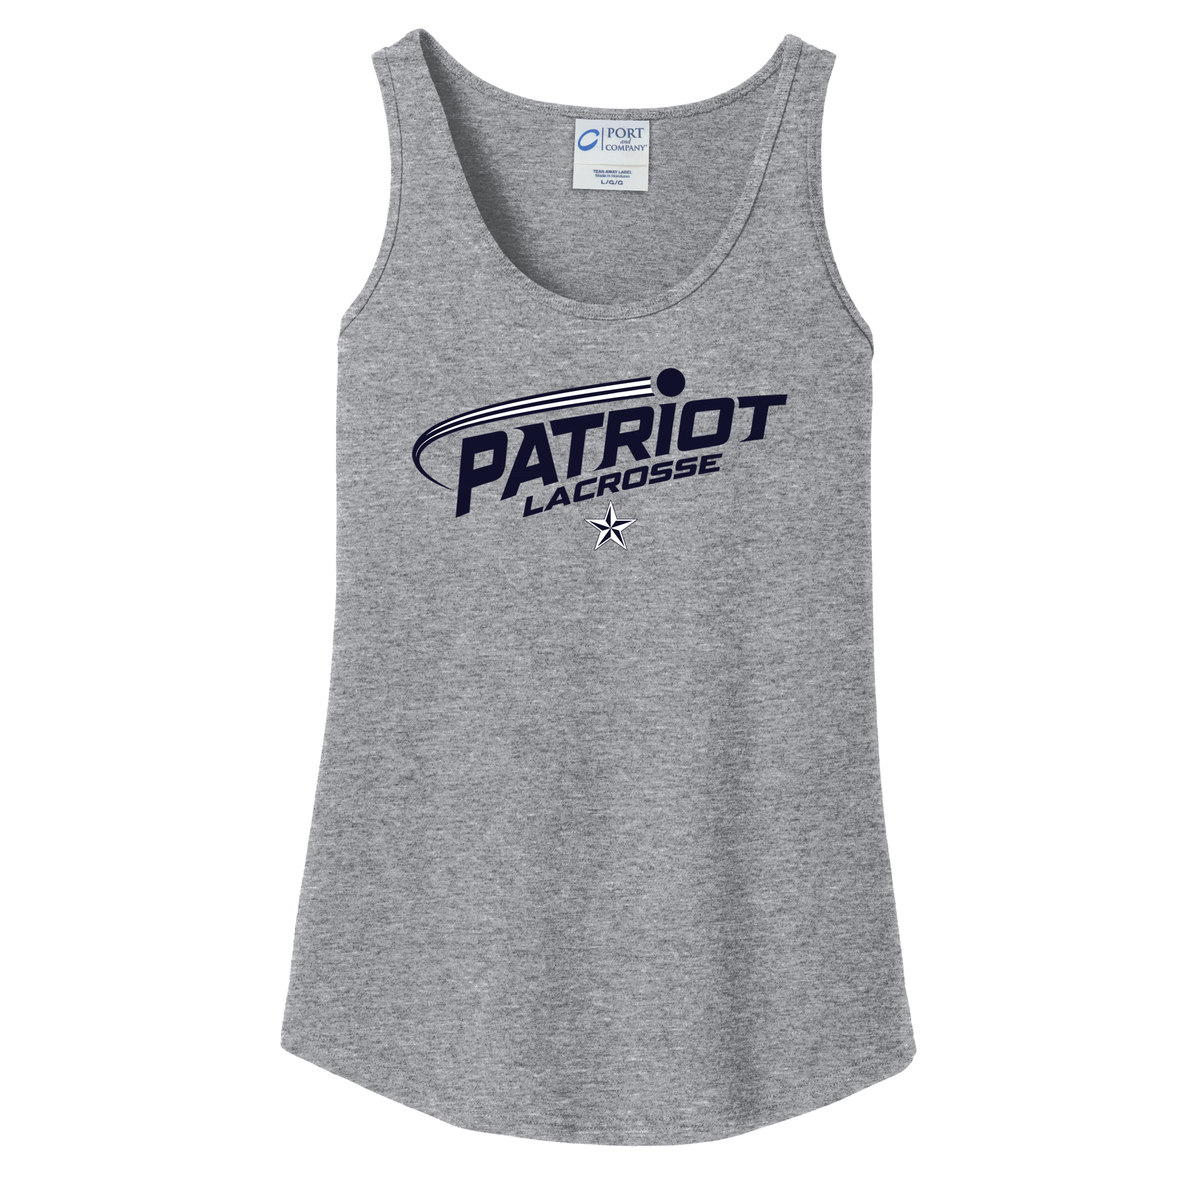 Patriot Lacrosse Women's Tank Top